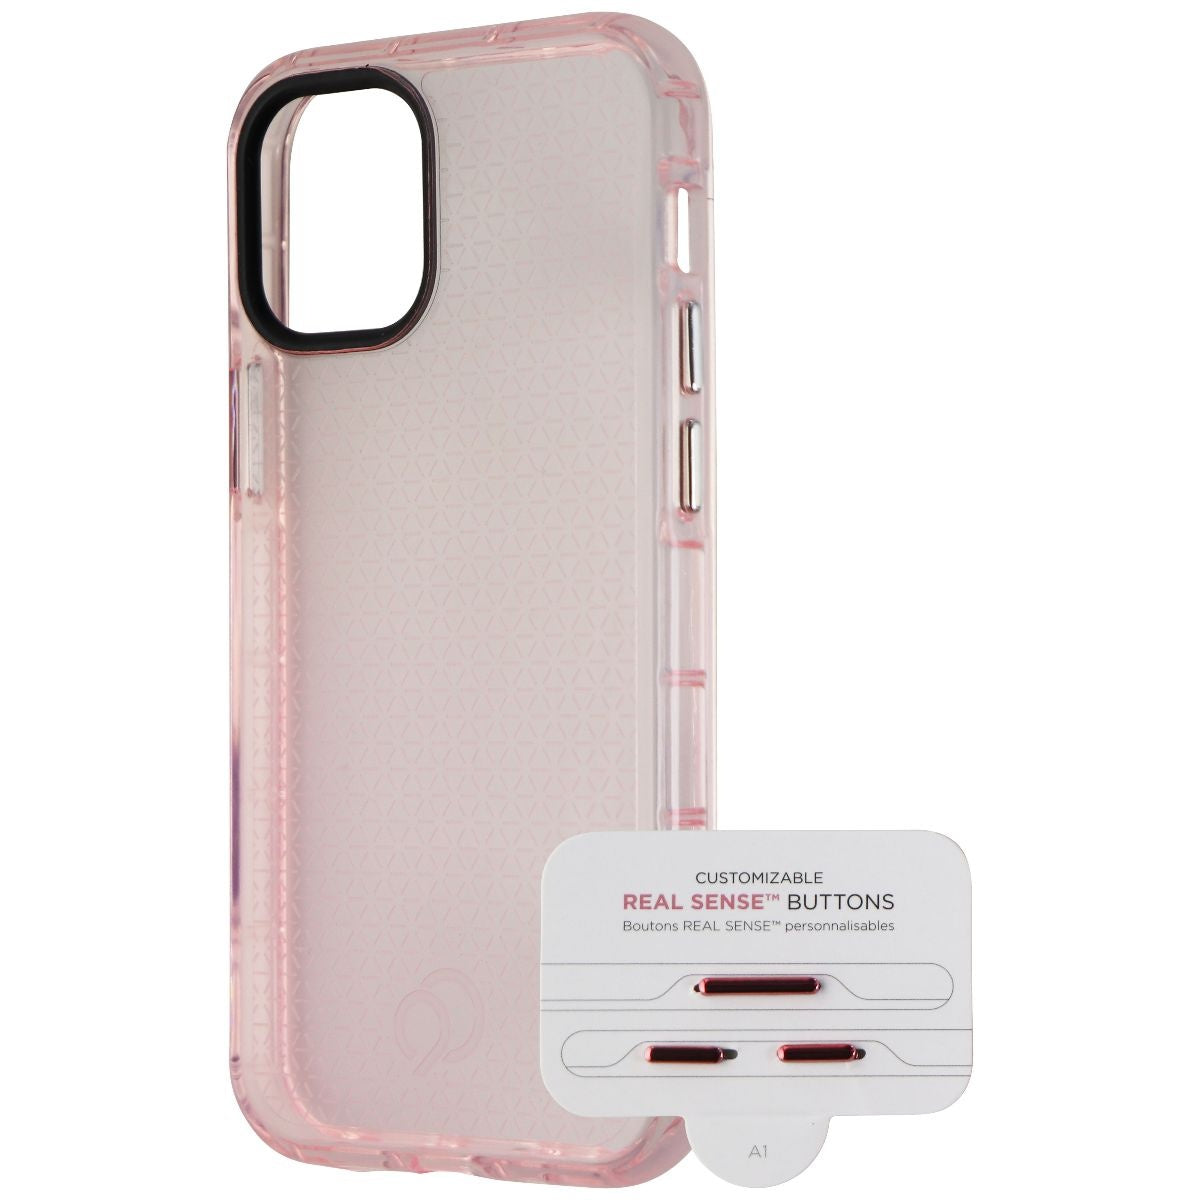 Nimbus9 Phantom 2 Series Case for Apple iPhone 12 mini - Flamingo Pink Cell Phone - Cases, Covers & Skins Nimbus9    - Simple Cell Bulk Wholesale Pricing - USA Seller